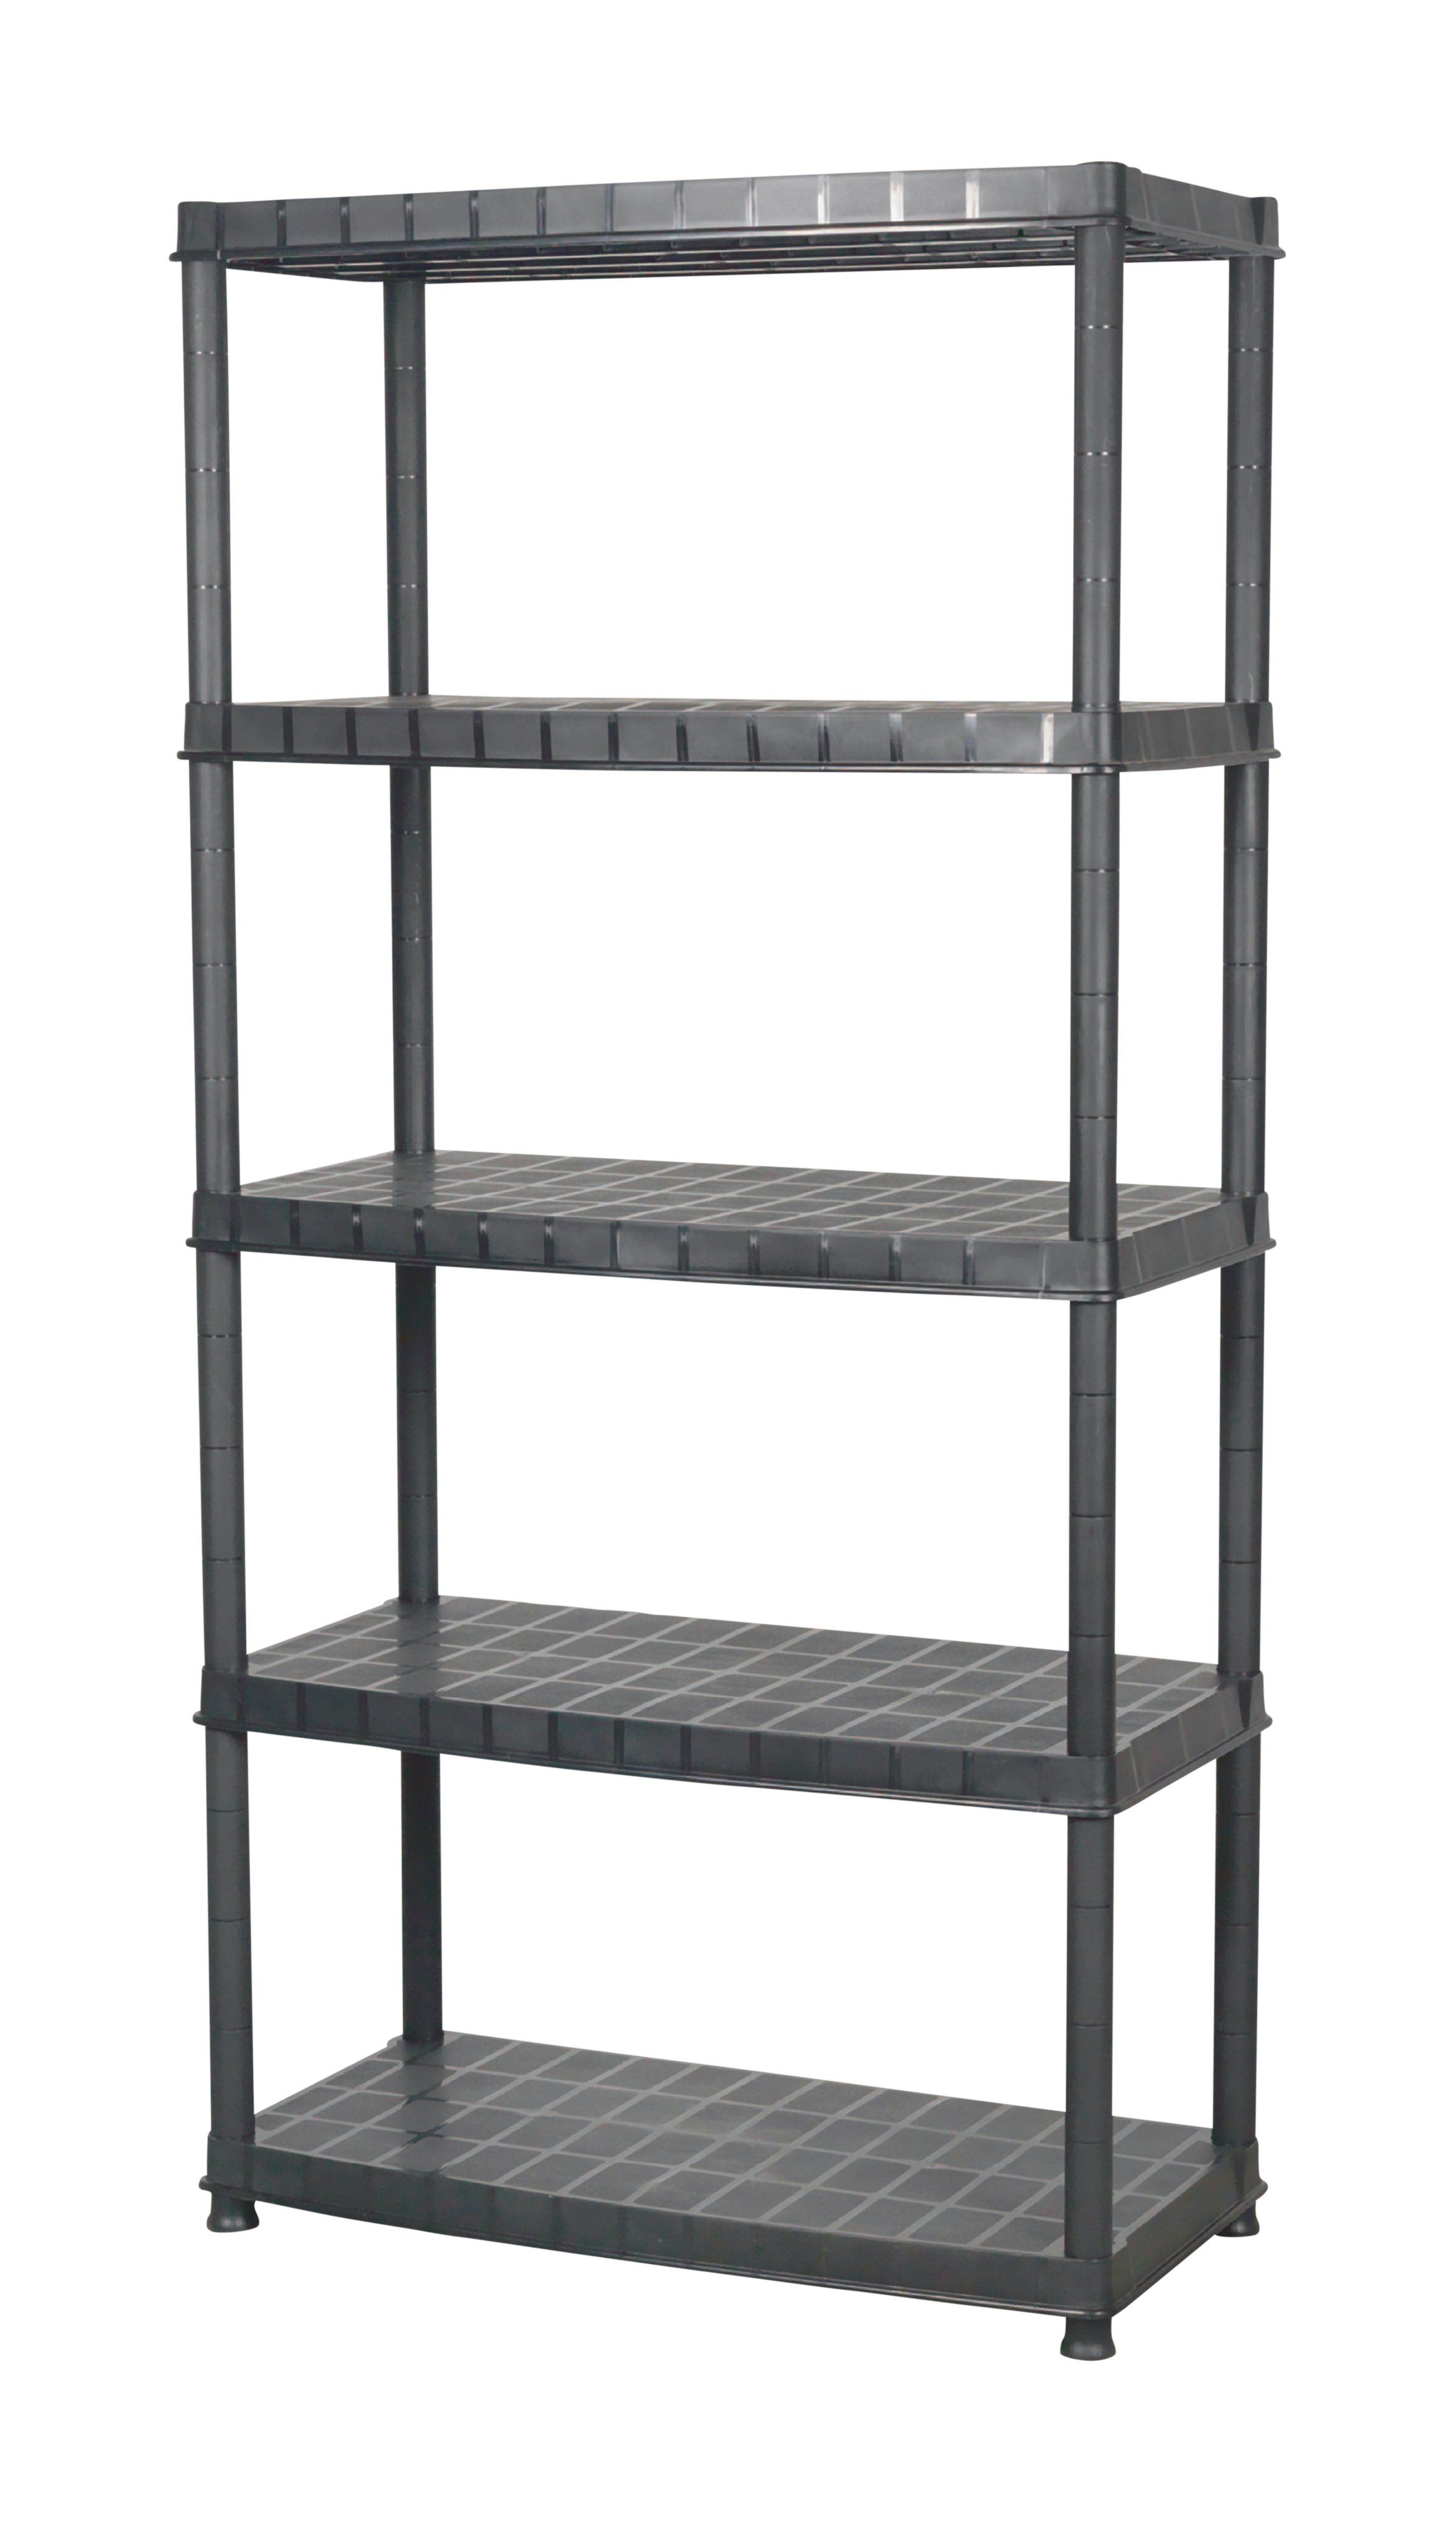 GoodHome Black 5 shelf Plastic Shelving unit (H)1850mm (W)915mm